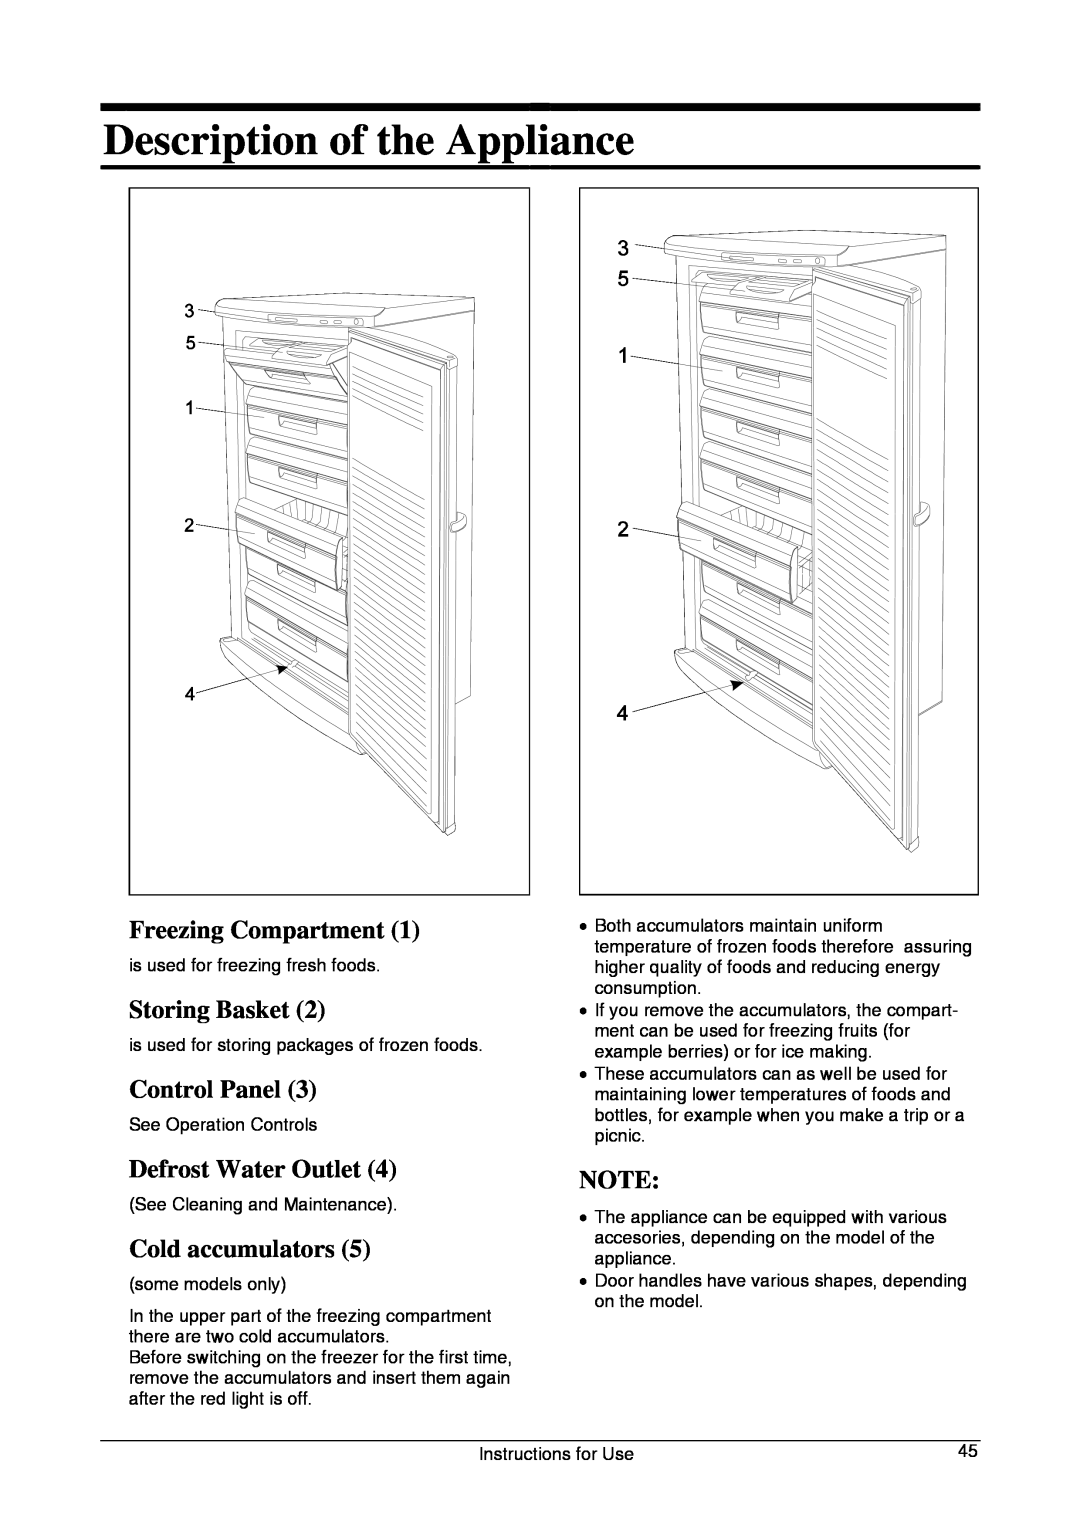 Smeg CV33B manual Description of the Appliance, Freezing Compartment, Storing Basket, Control Panel, Defrost Water Outlet 